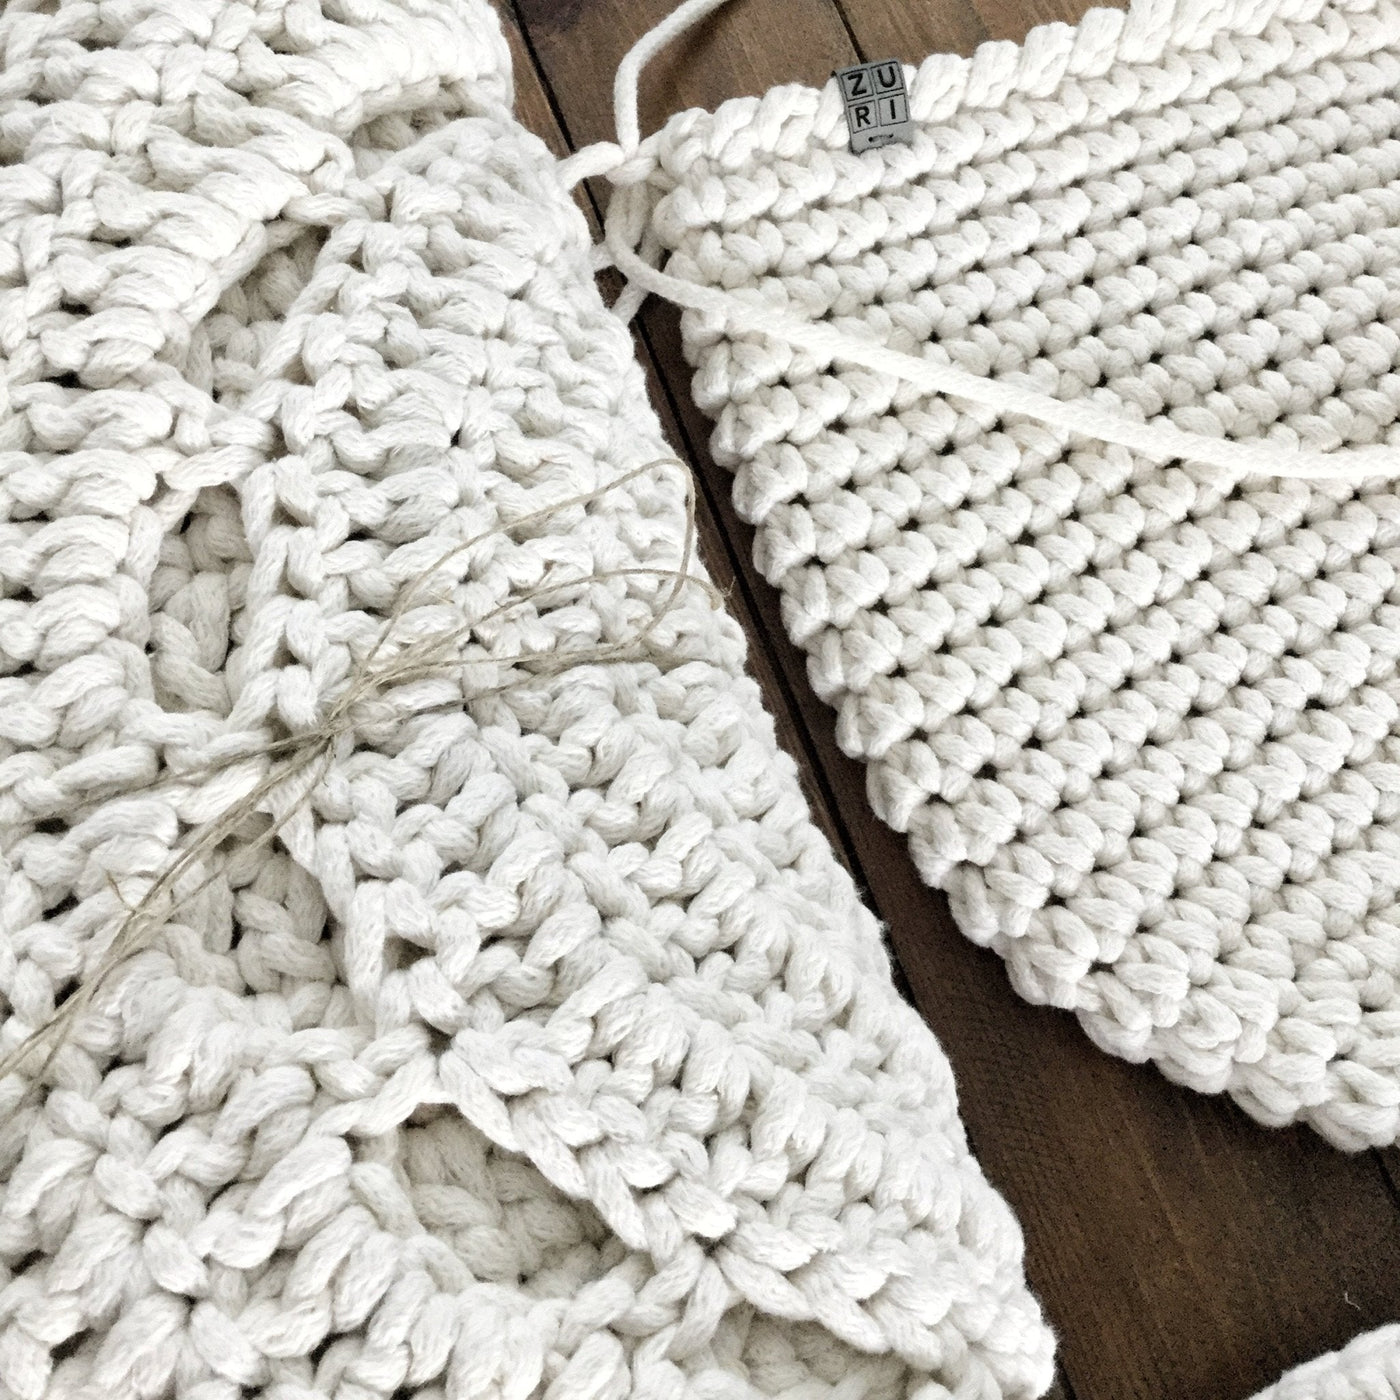 Crochet Doily Rug | Ivory